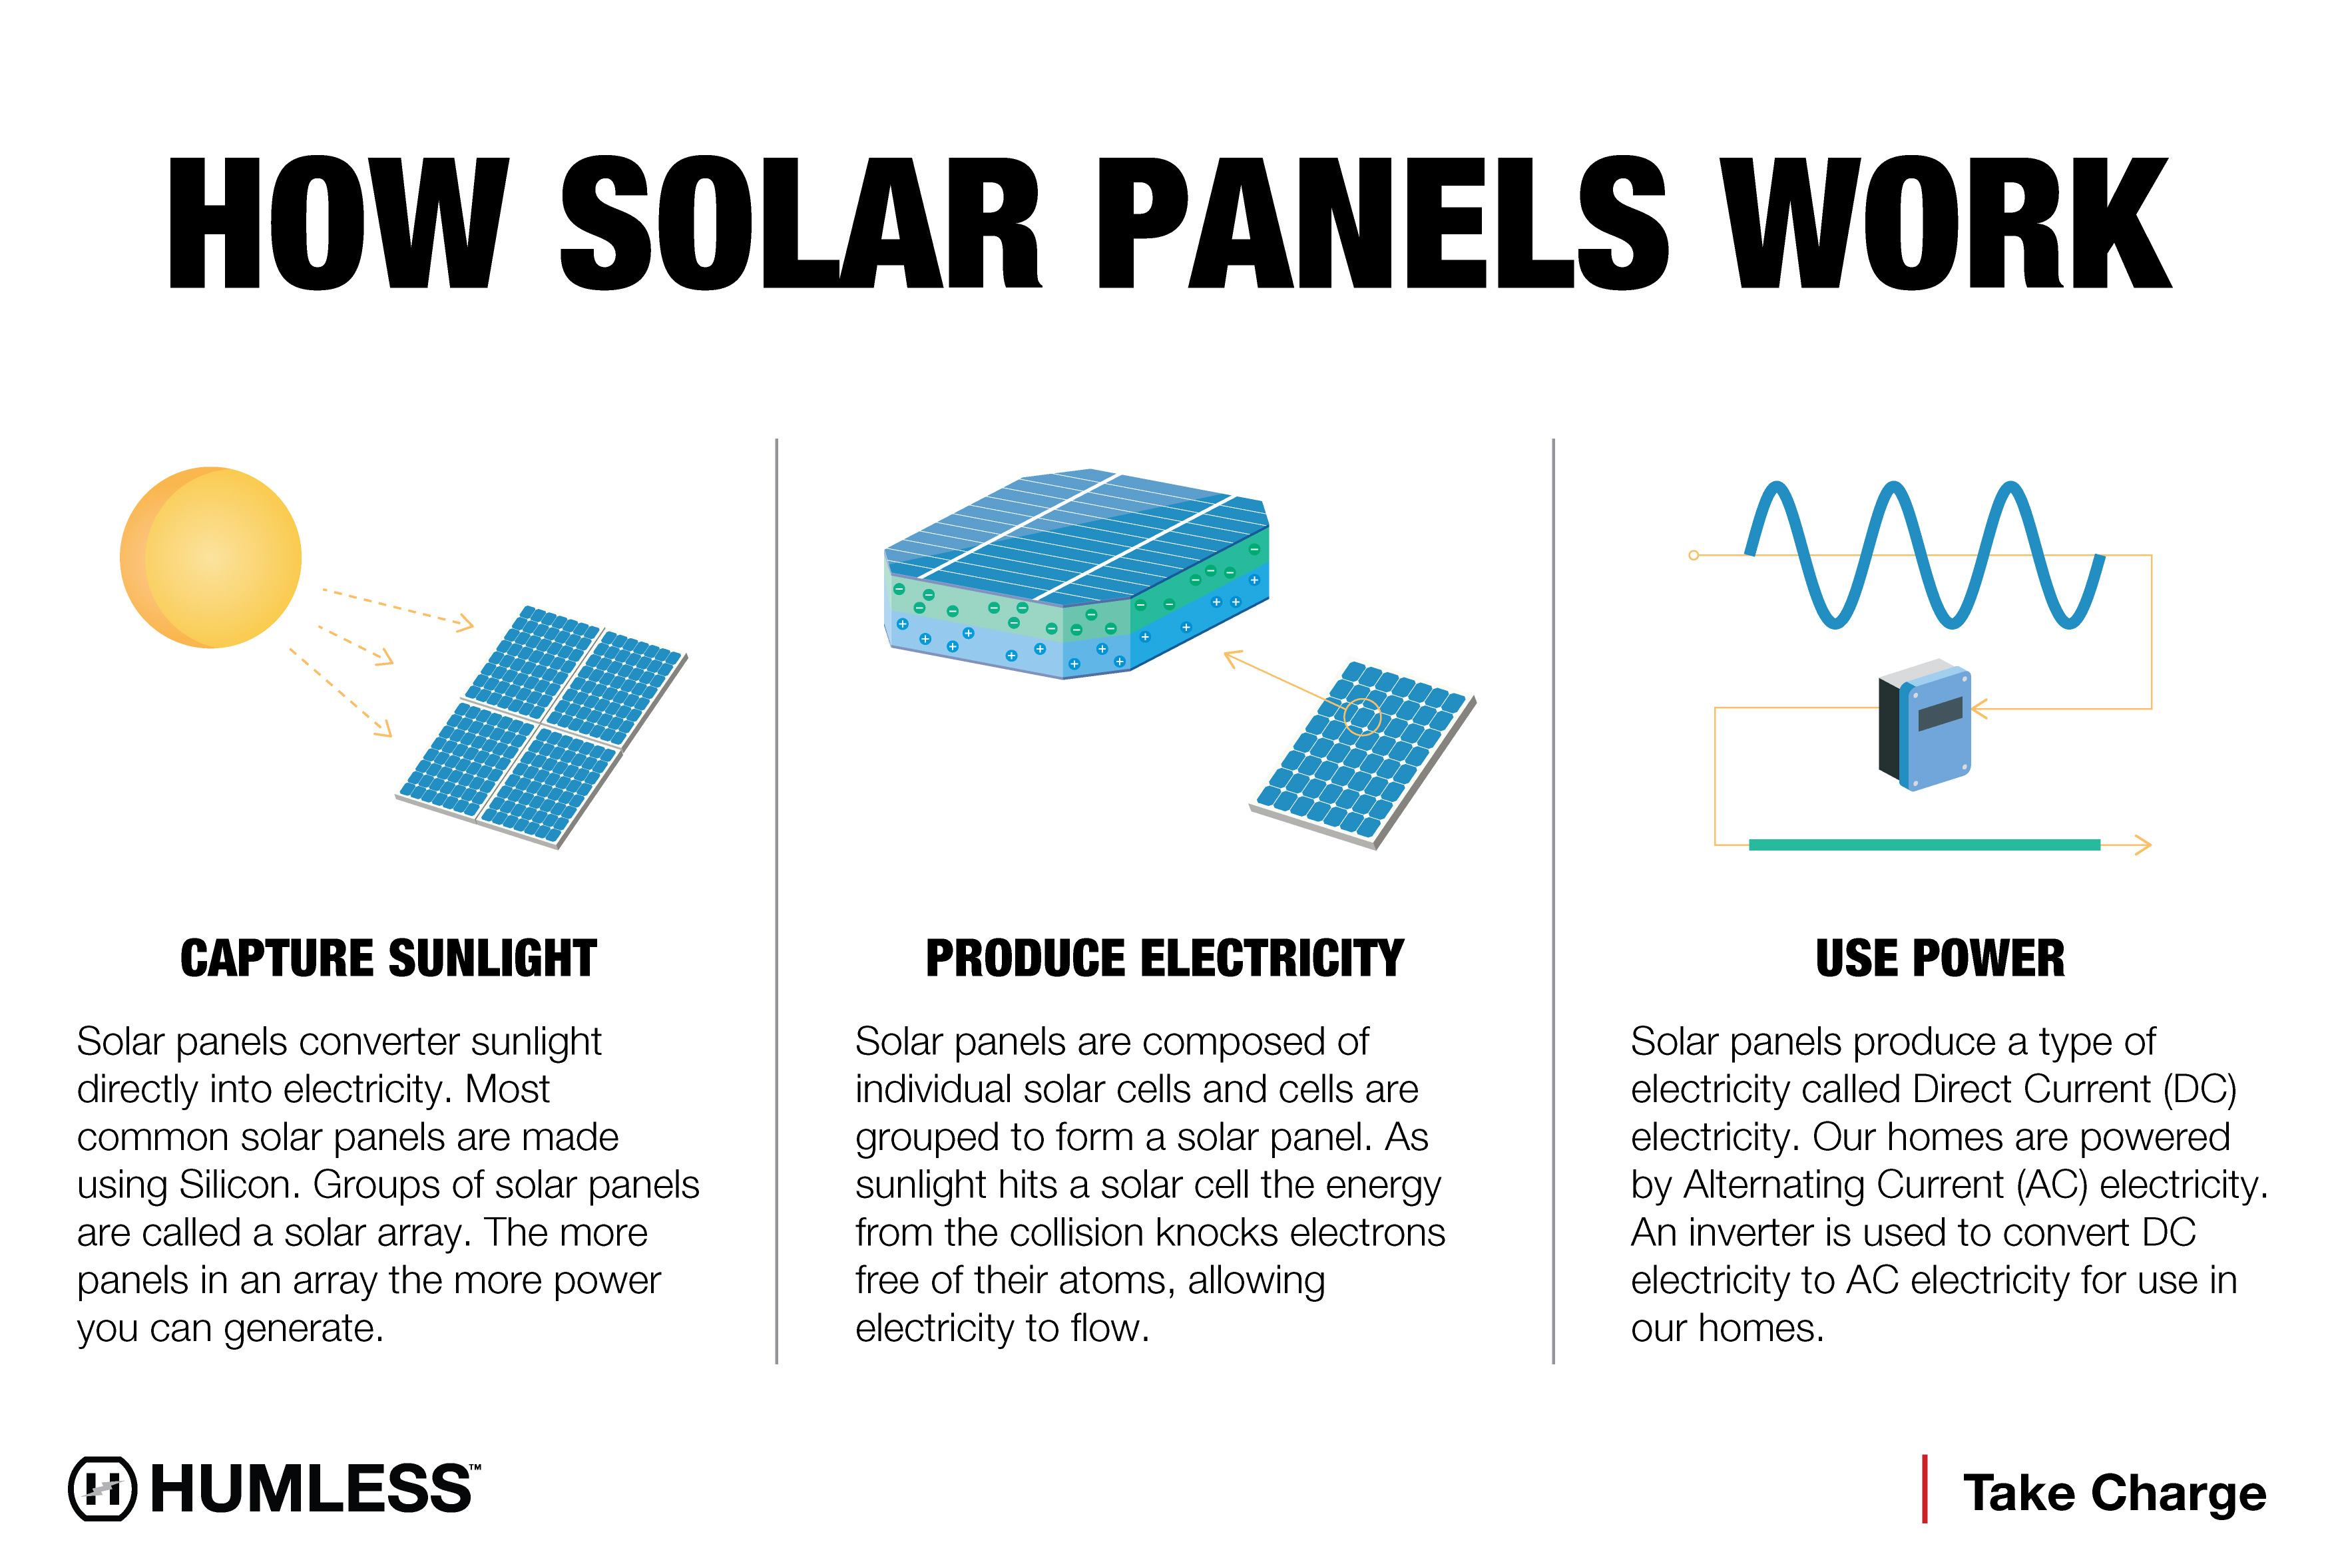 How Do Solar Panels Work? Humless